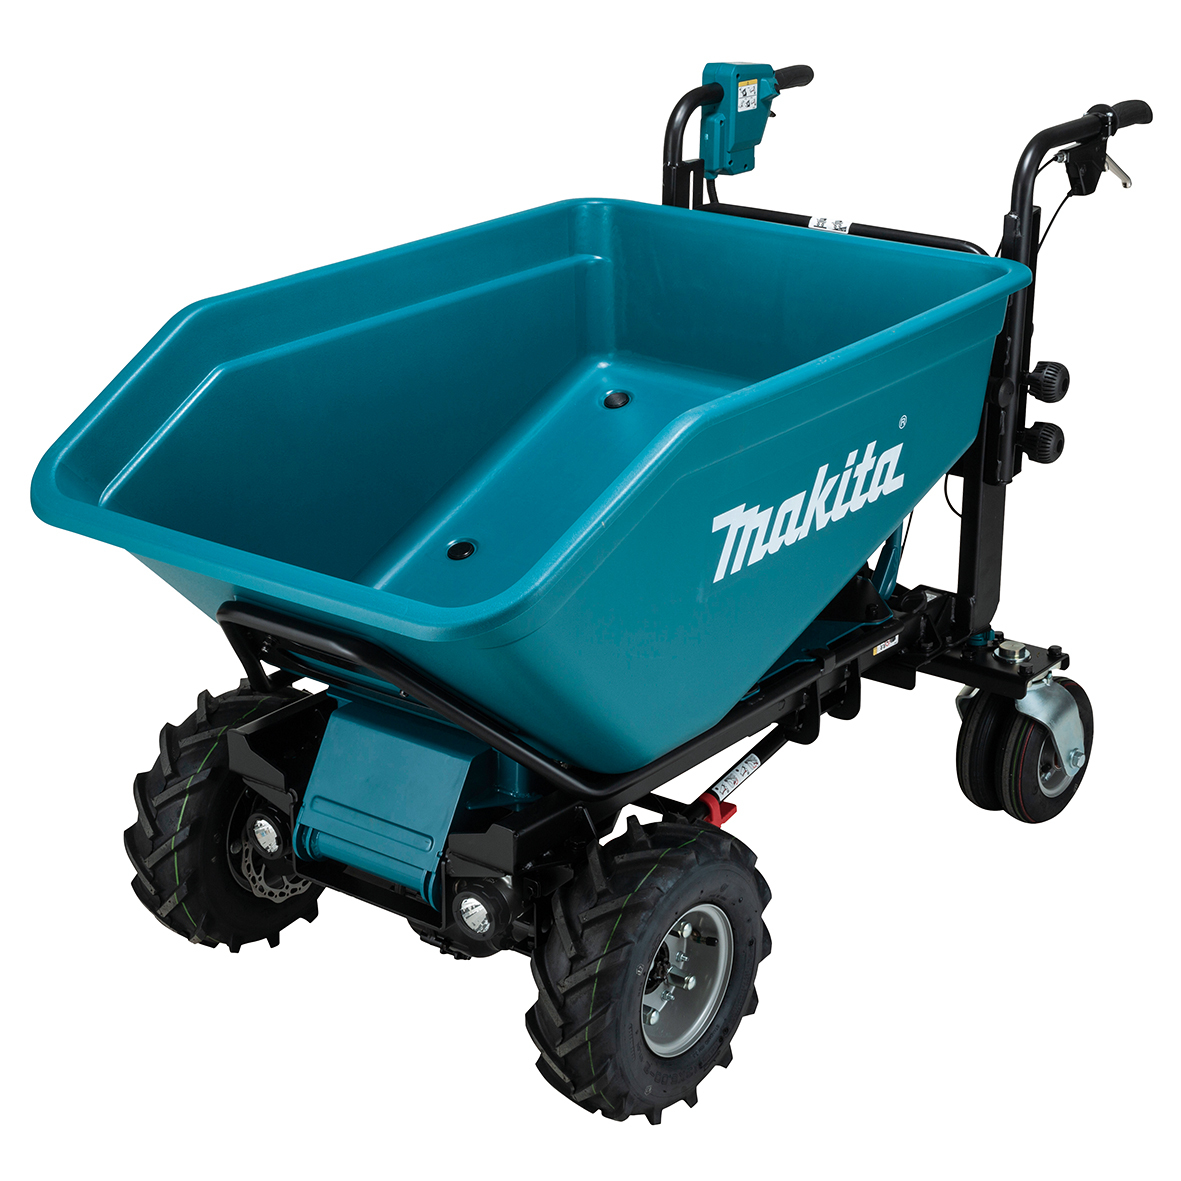 Makita 18Vx2 Brushless Wheelbarrow with Manual Dump & Bucket (Tool